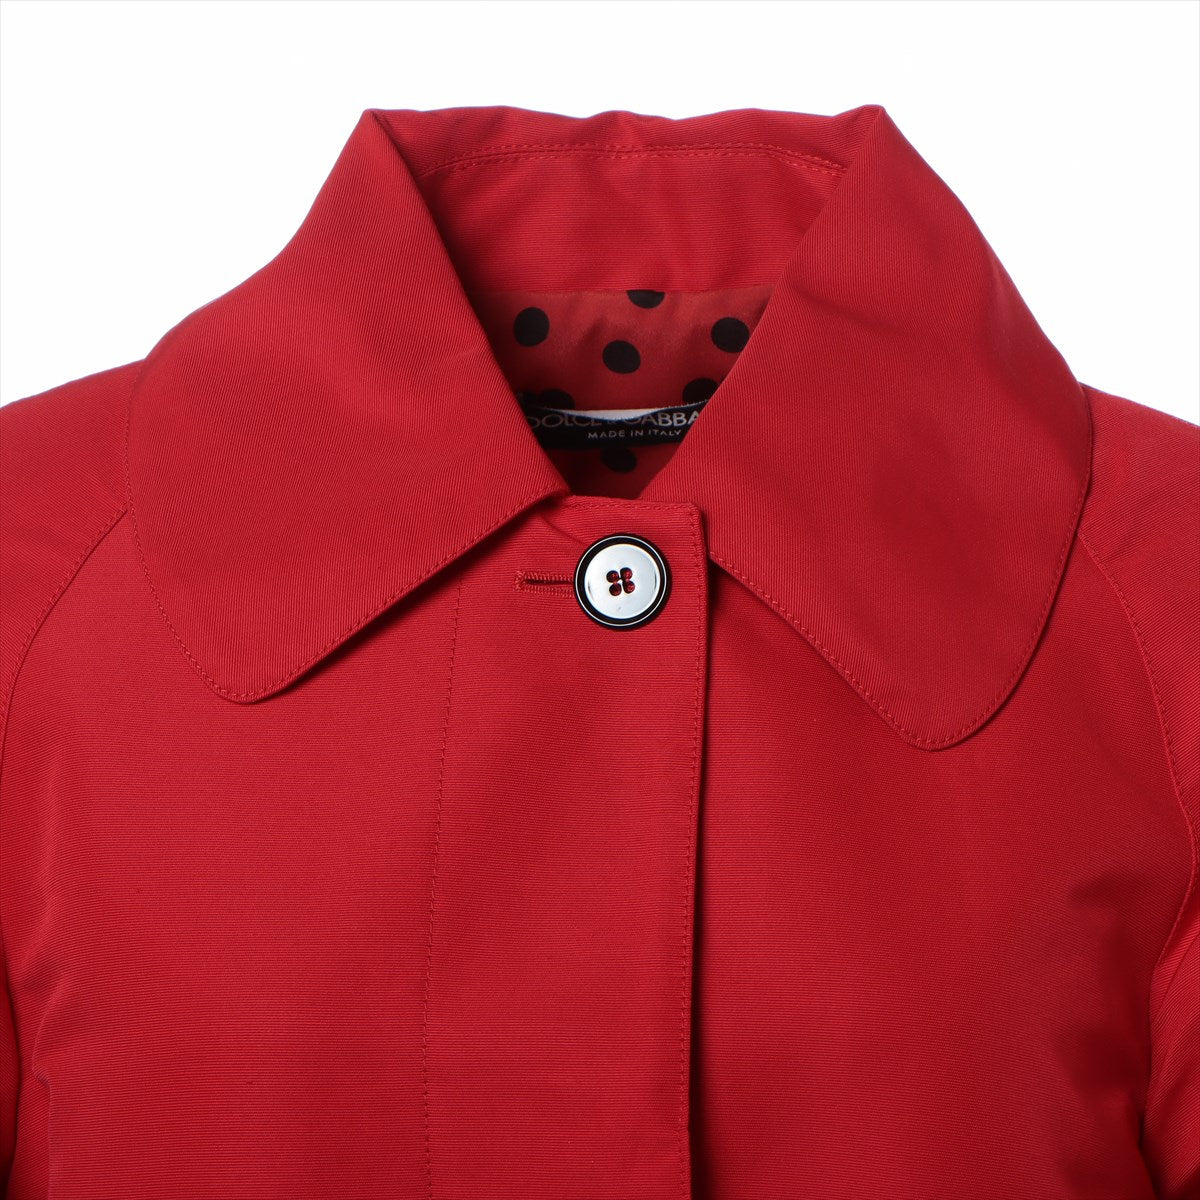 Dolce & Gabbana Cotton & nylon coats 38 Ladies' Red  Balmacarn Coat belted F0M09T